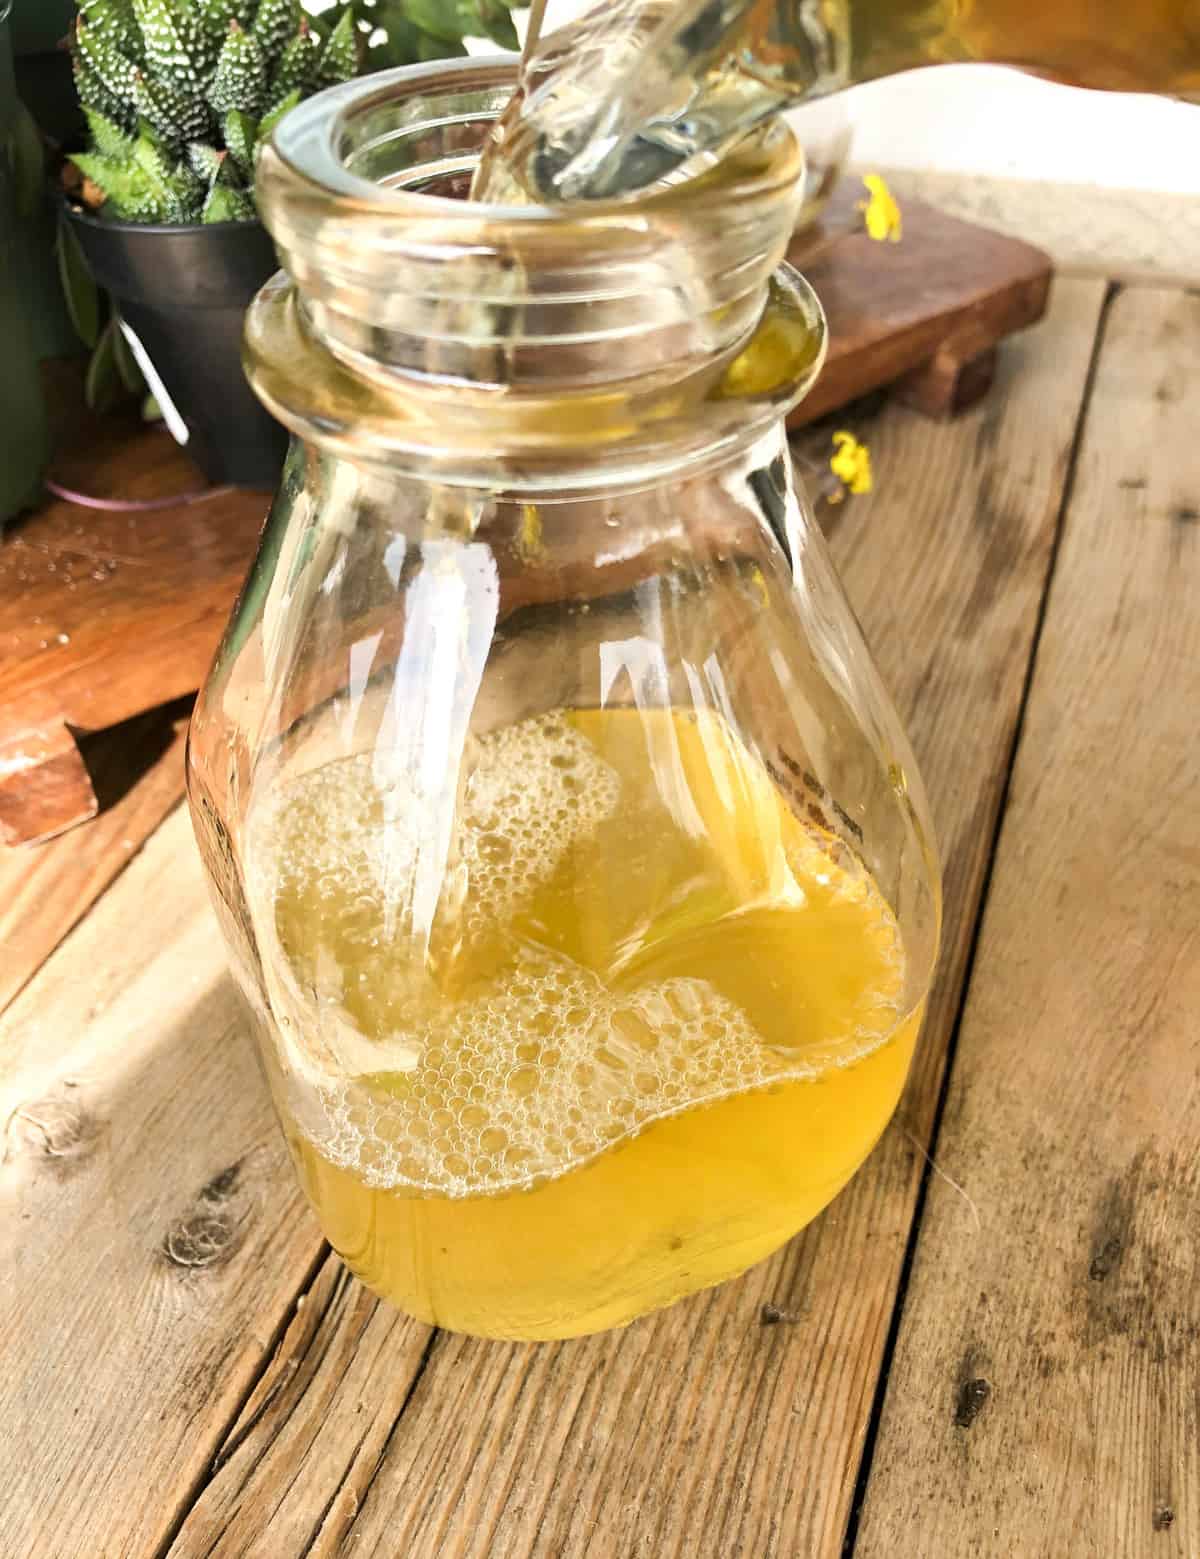 Pour in the apple cider vinegar.